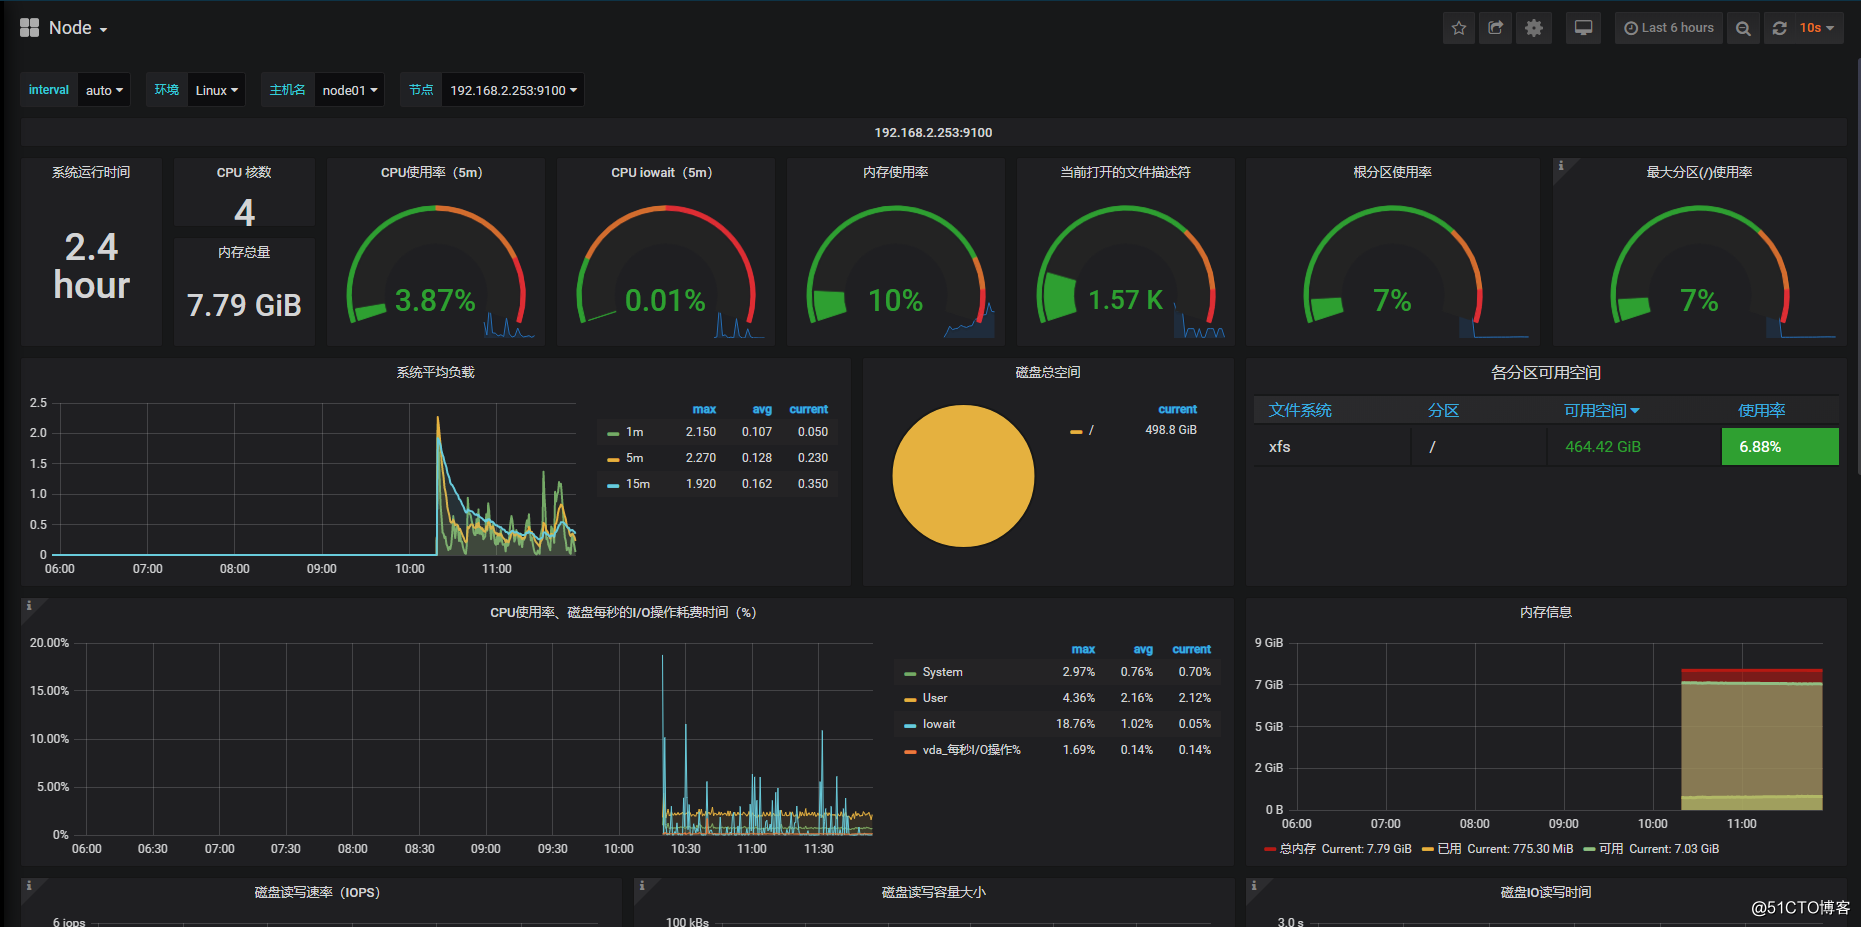 Based Kubernetes v1.14.0 deployment of node-exporter series of monitoring